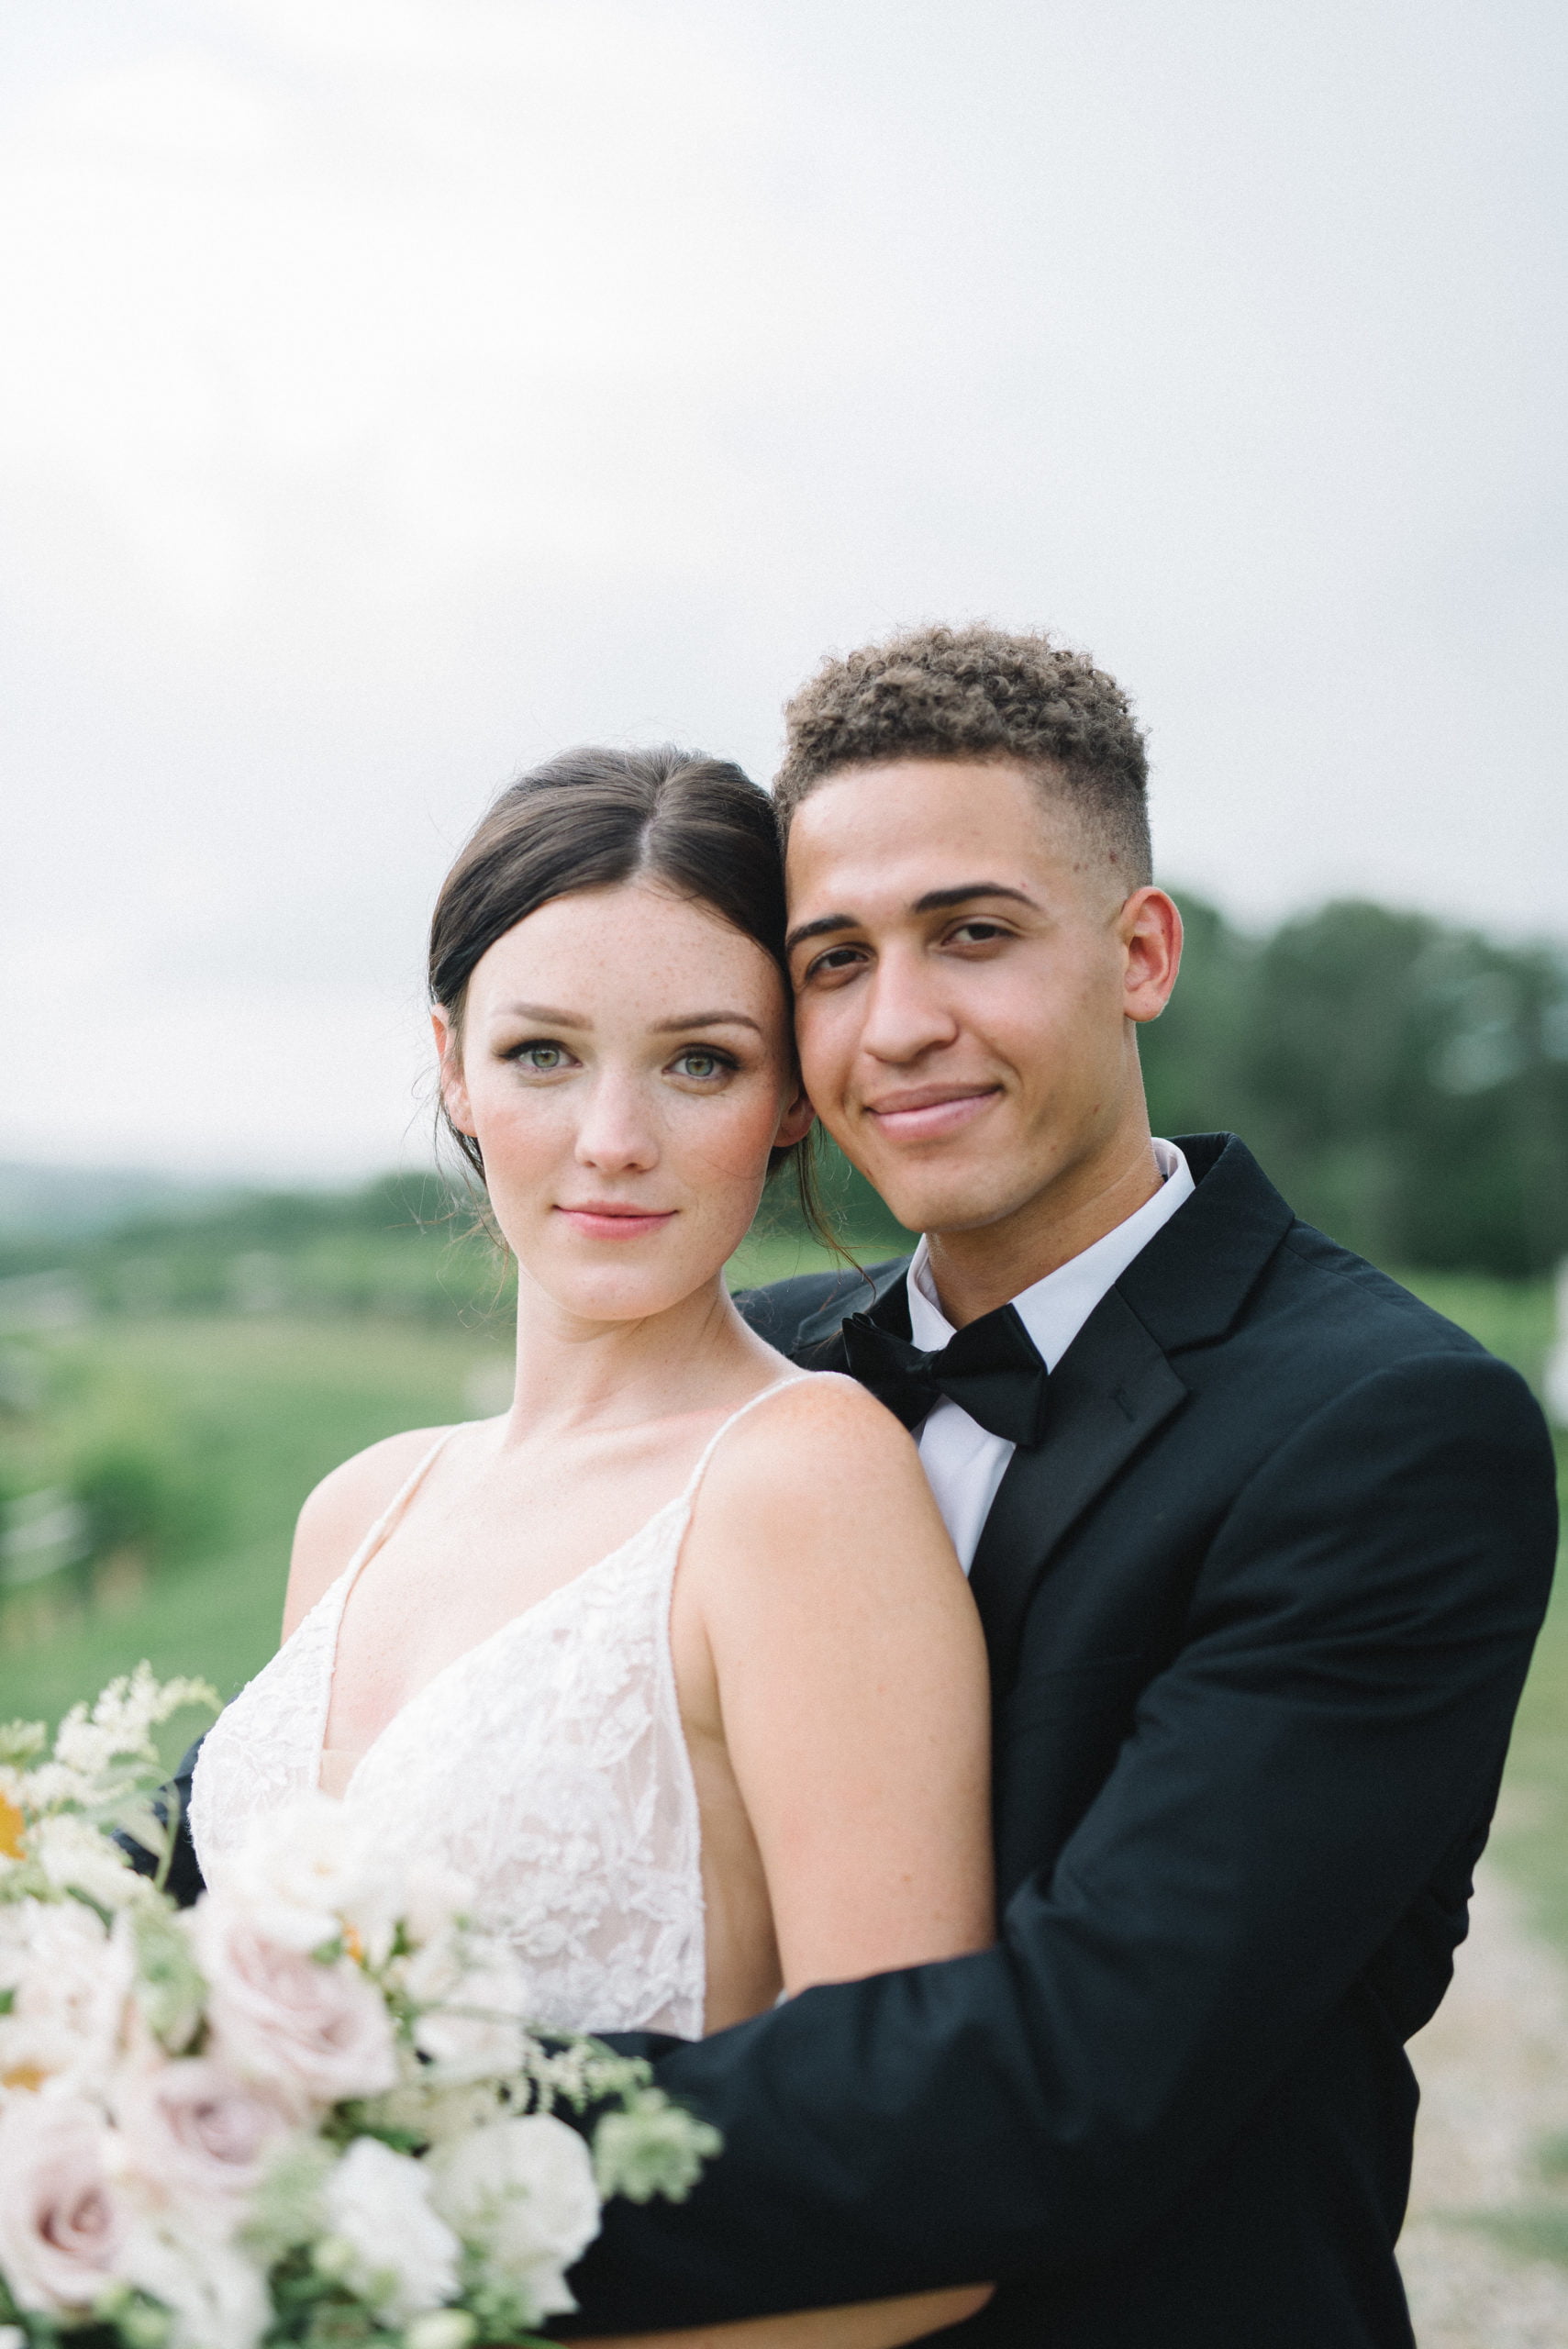 Stunning fine art bride and groom portrait